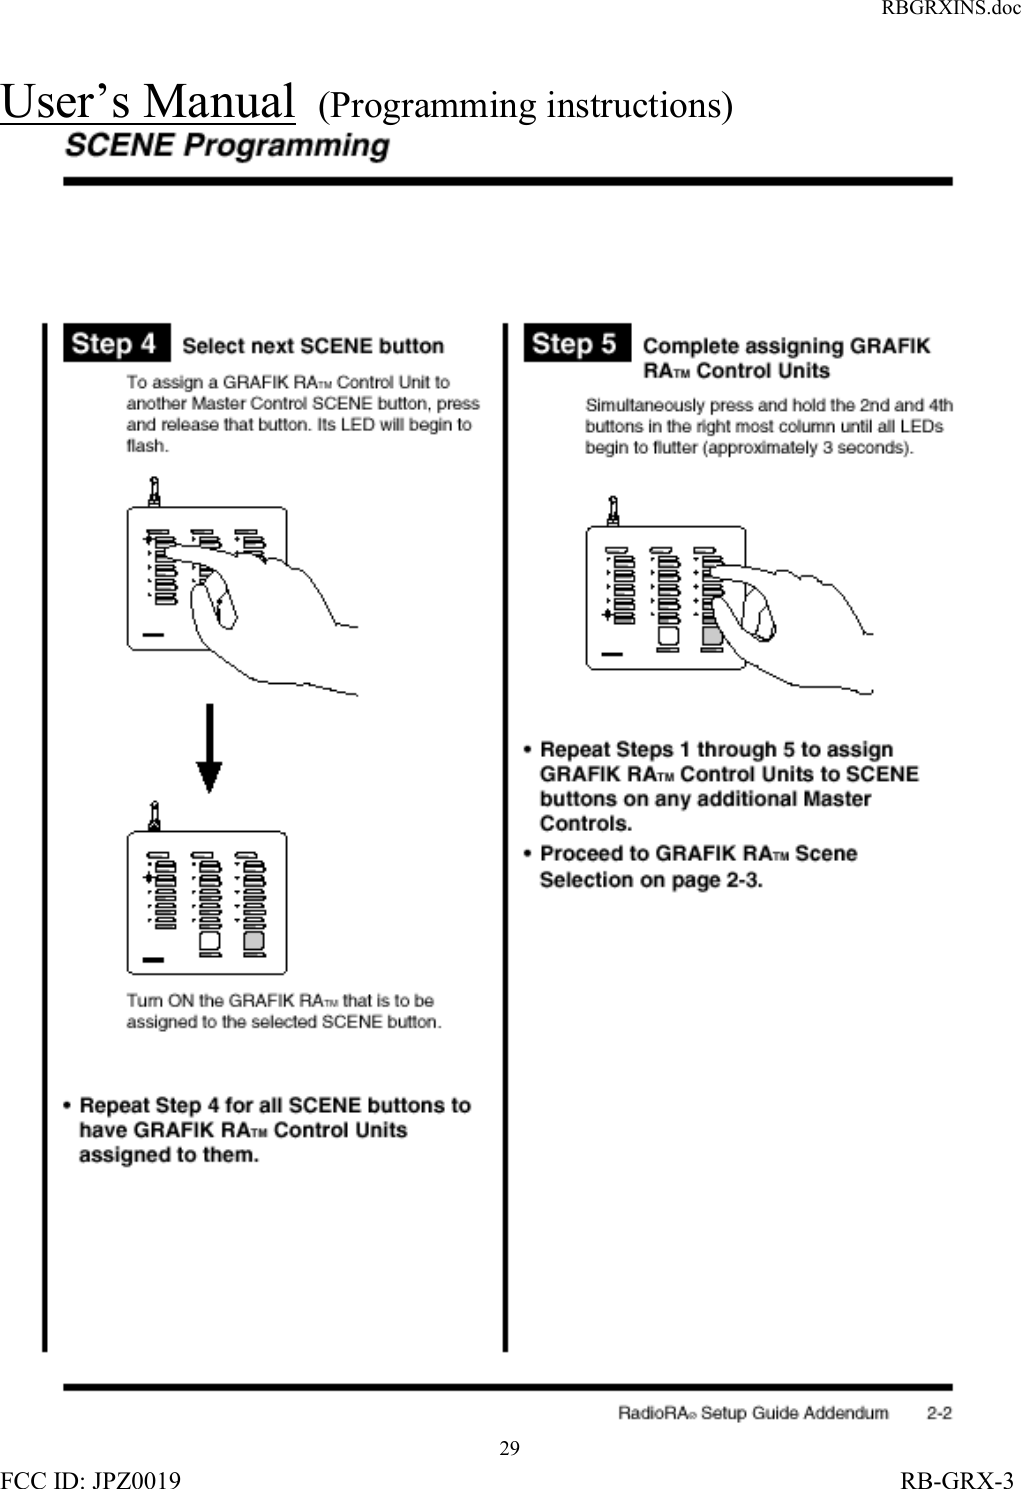 RBGRXINS.docFCC ID: JPZ0019                                                                                                                   RB-GRX-329User’s Manual  (Programming instructions)